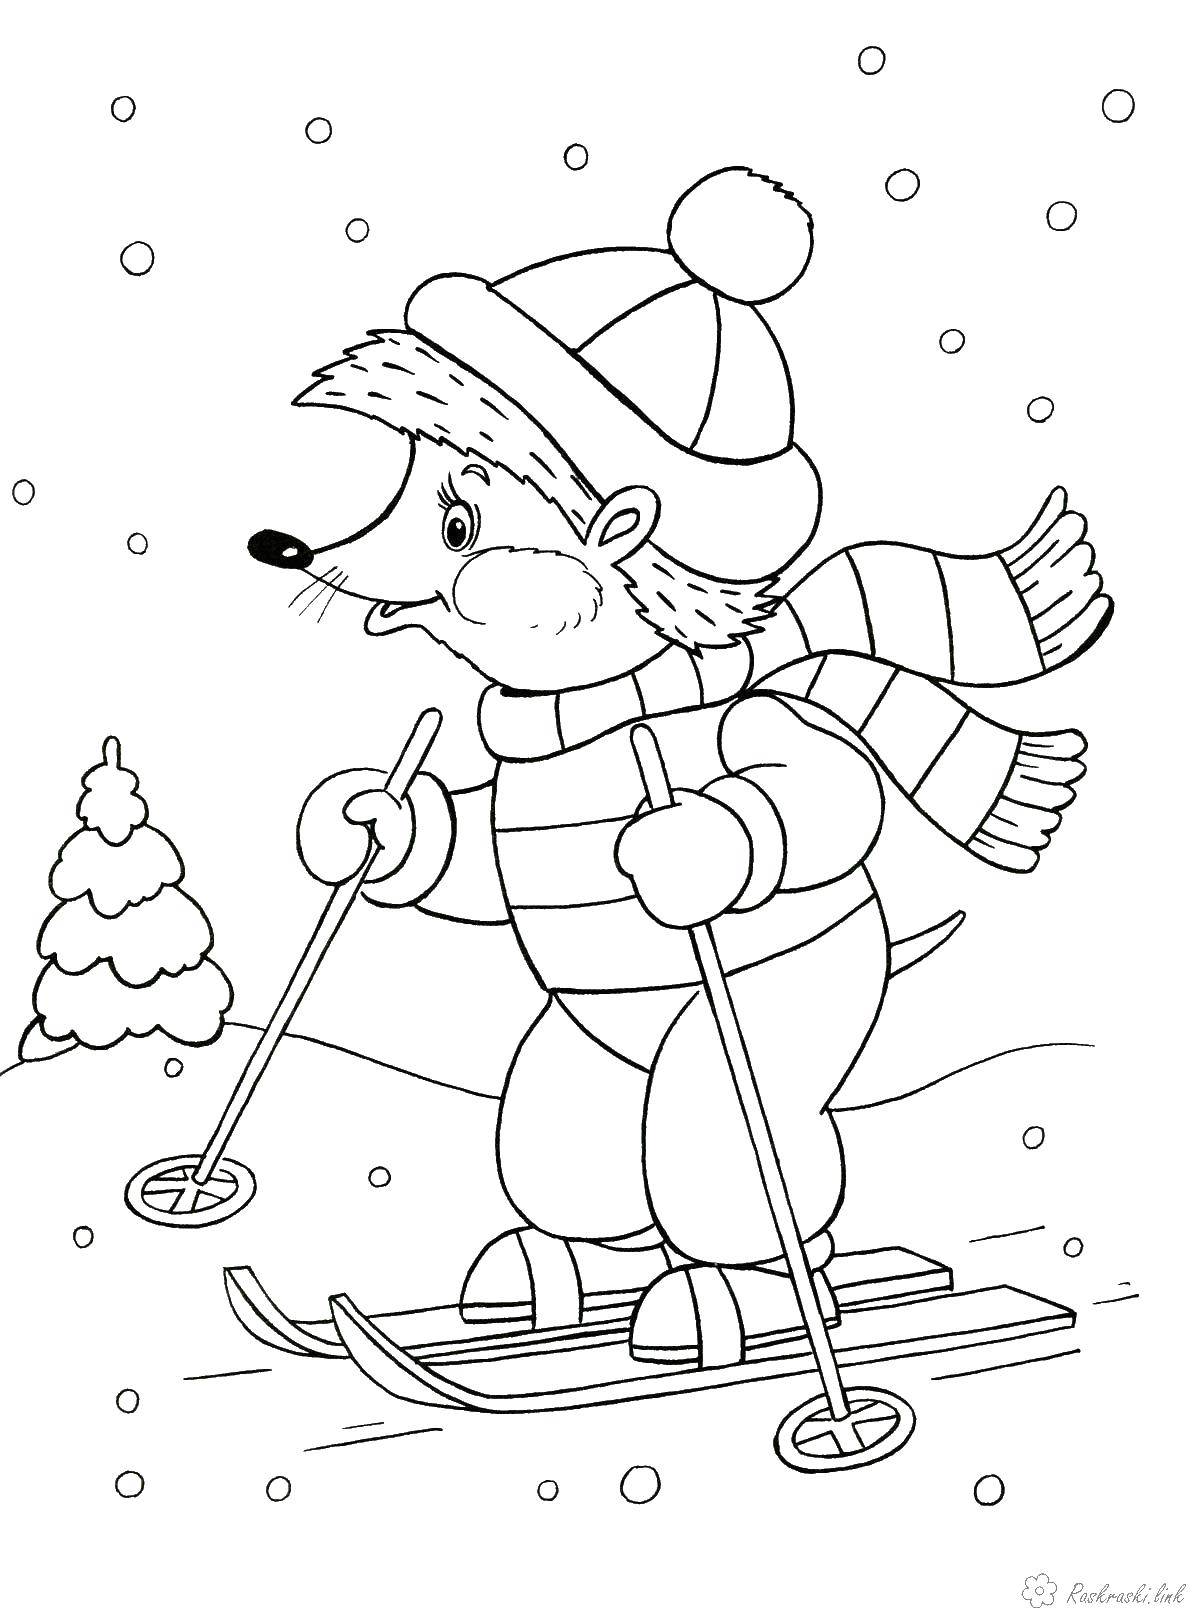 Coloring Hedgehog ski. Category skiing. Tags:  hedgehog, skiing, winter.